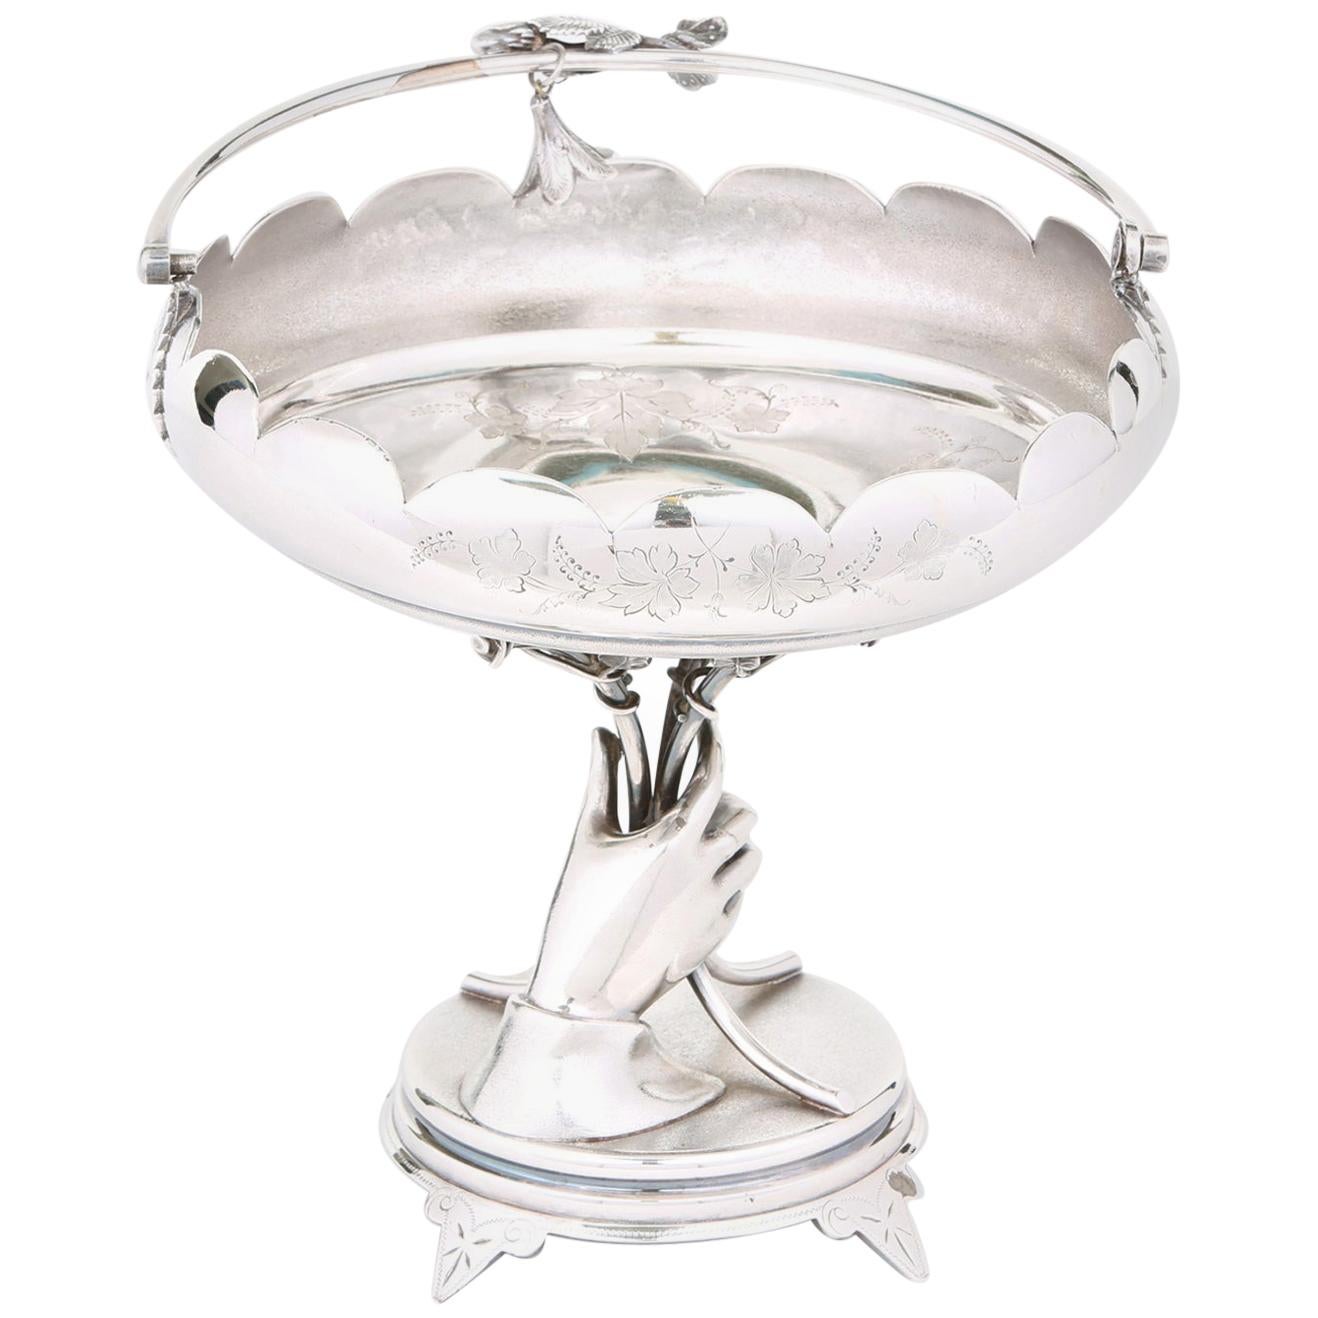 Silver Plated Decorative Bouquet Basket Centerpiece